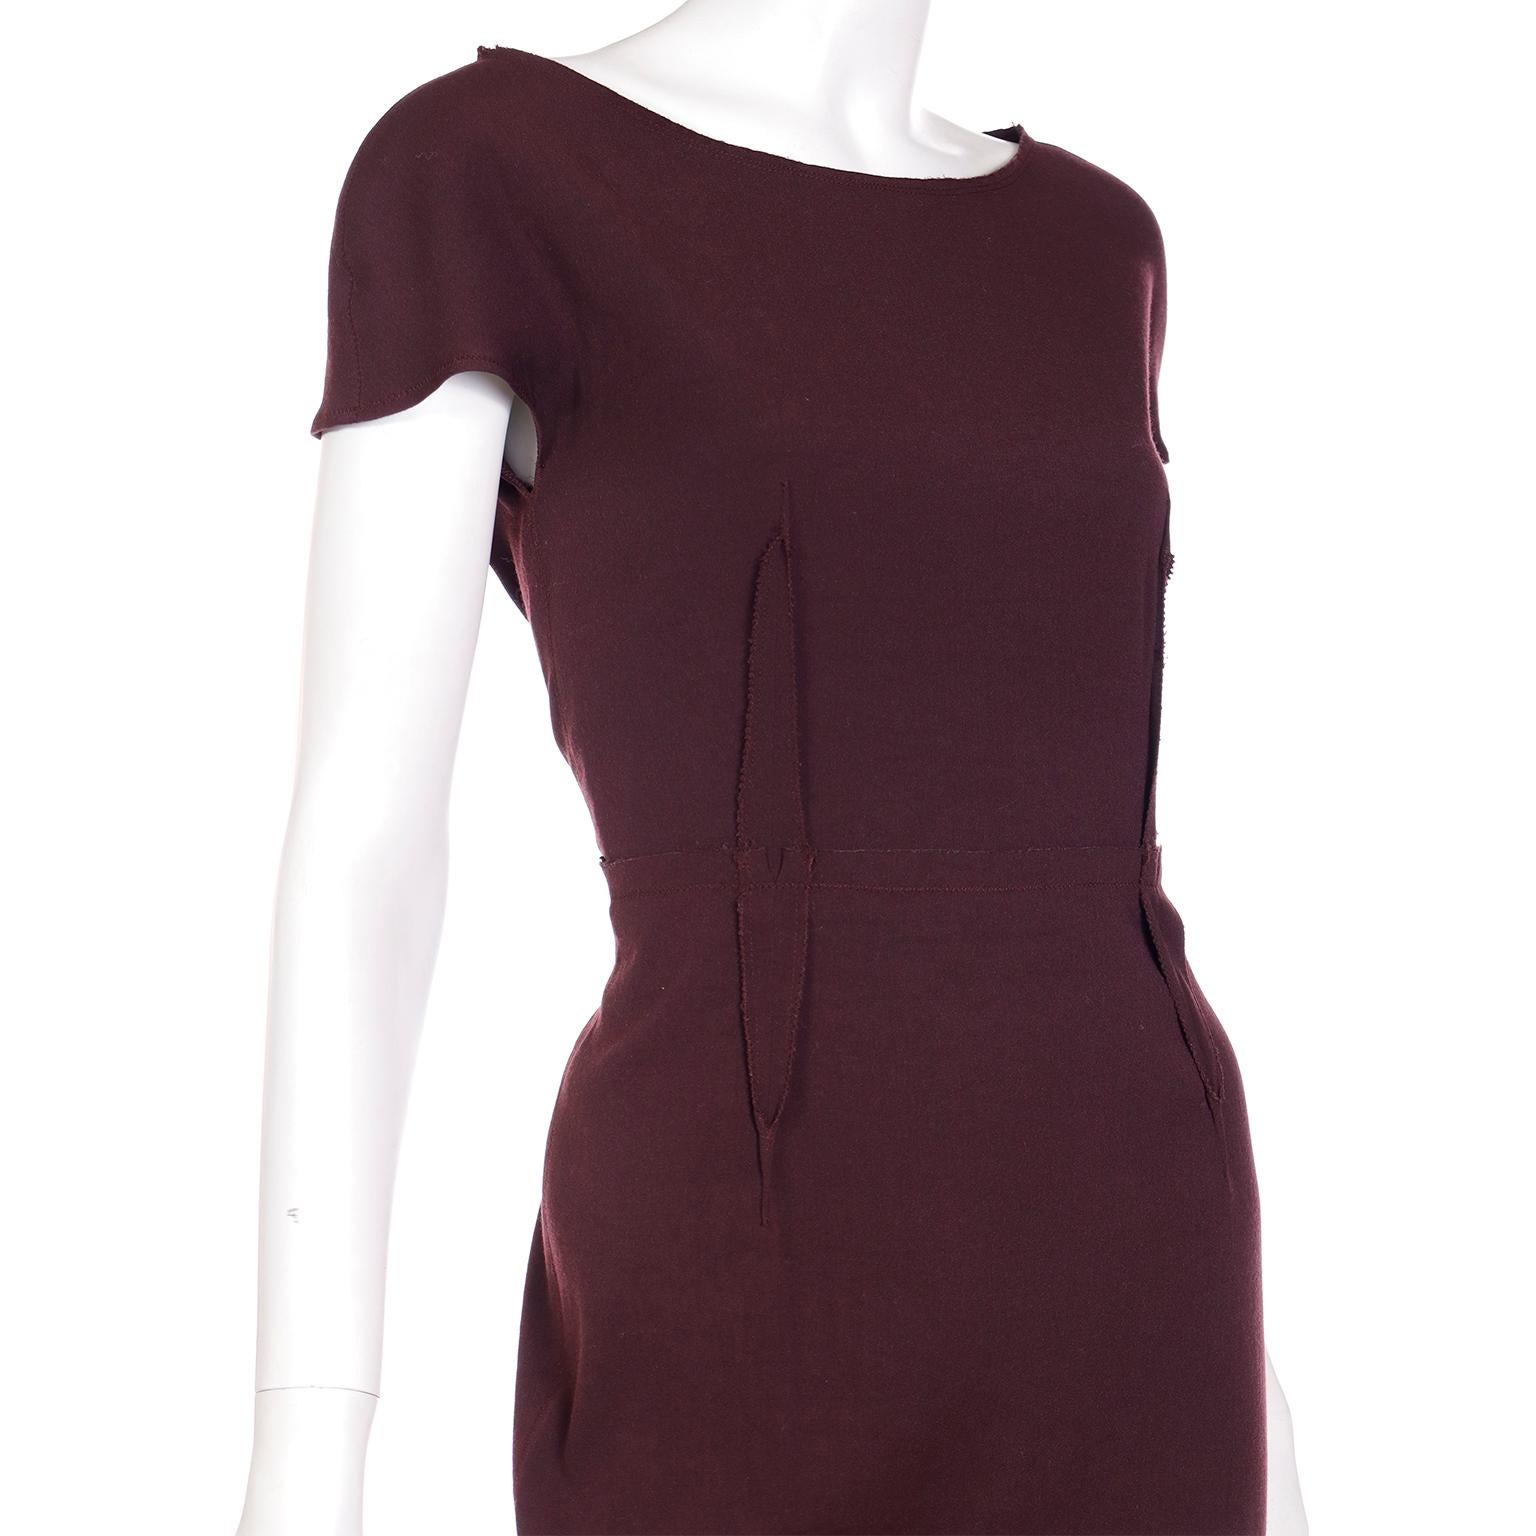 Lanvin Alber Elbaz Fall Winter 2011 Burgundy Deconstructed Short Sleeve Dress For Sale 4